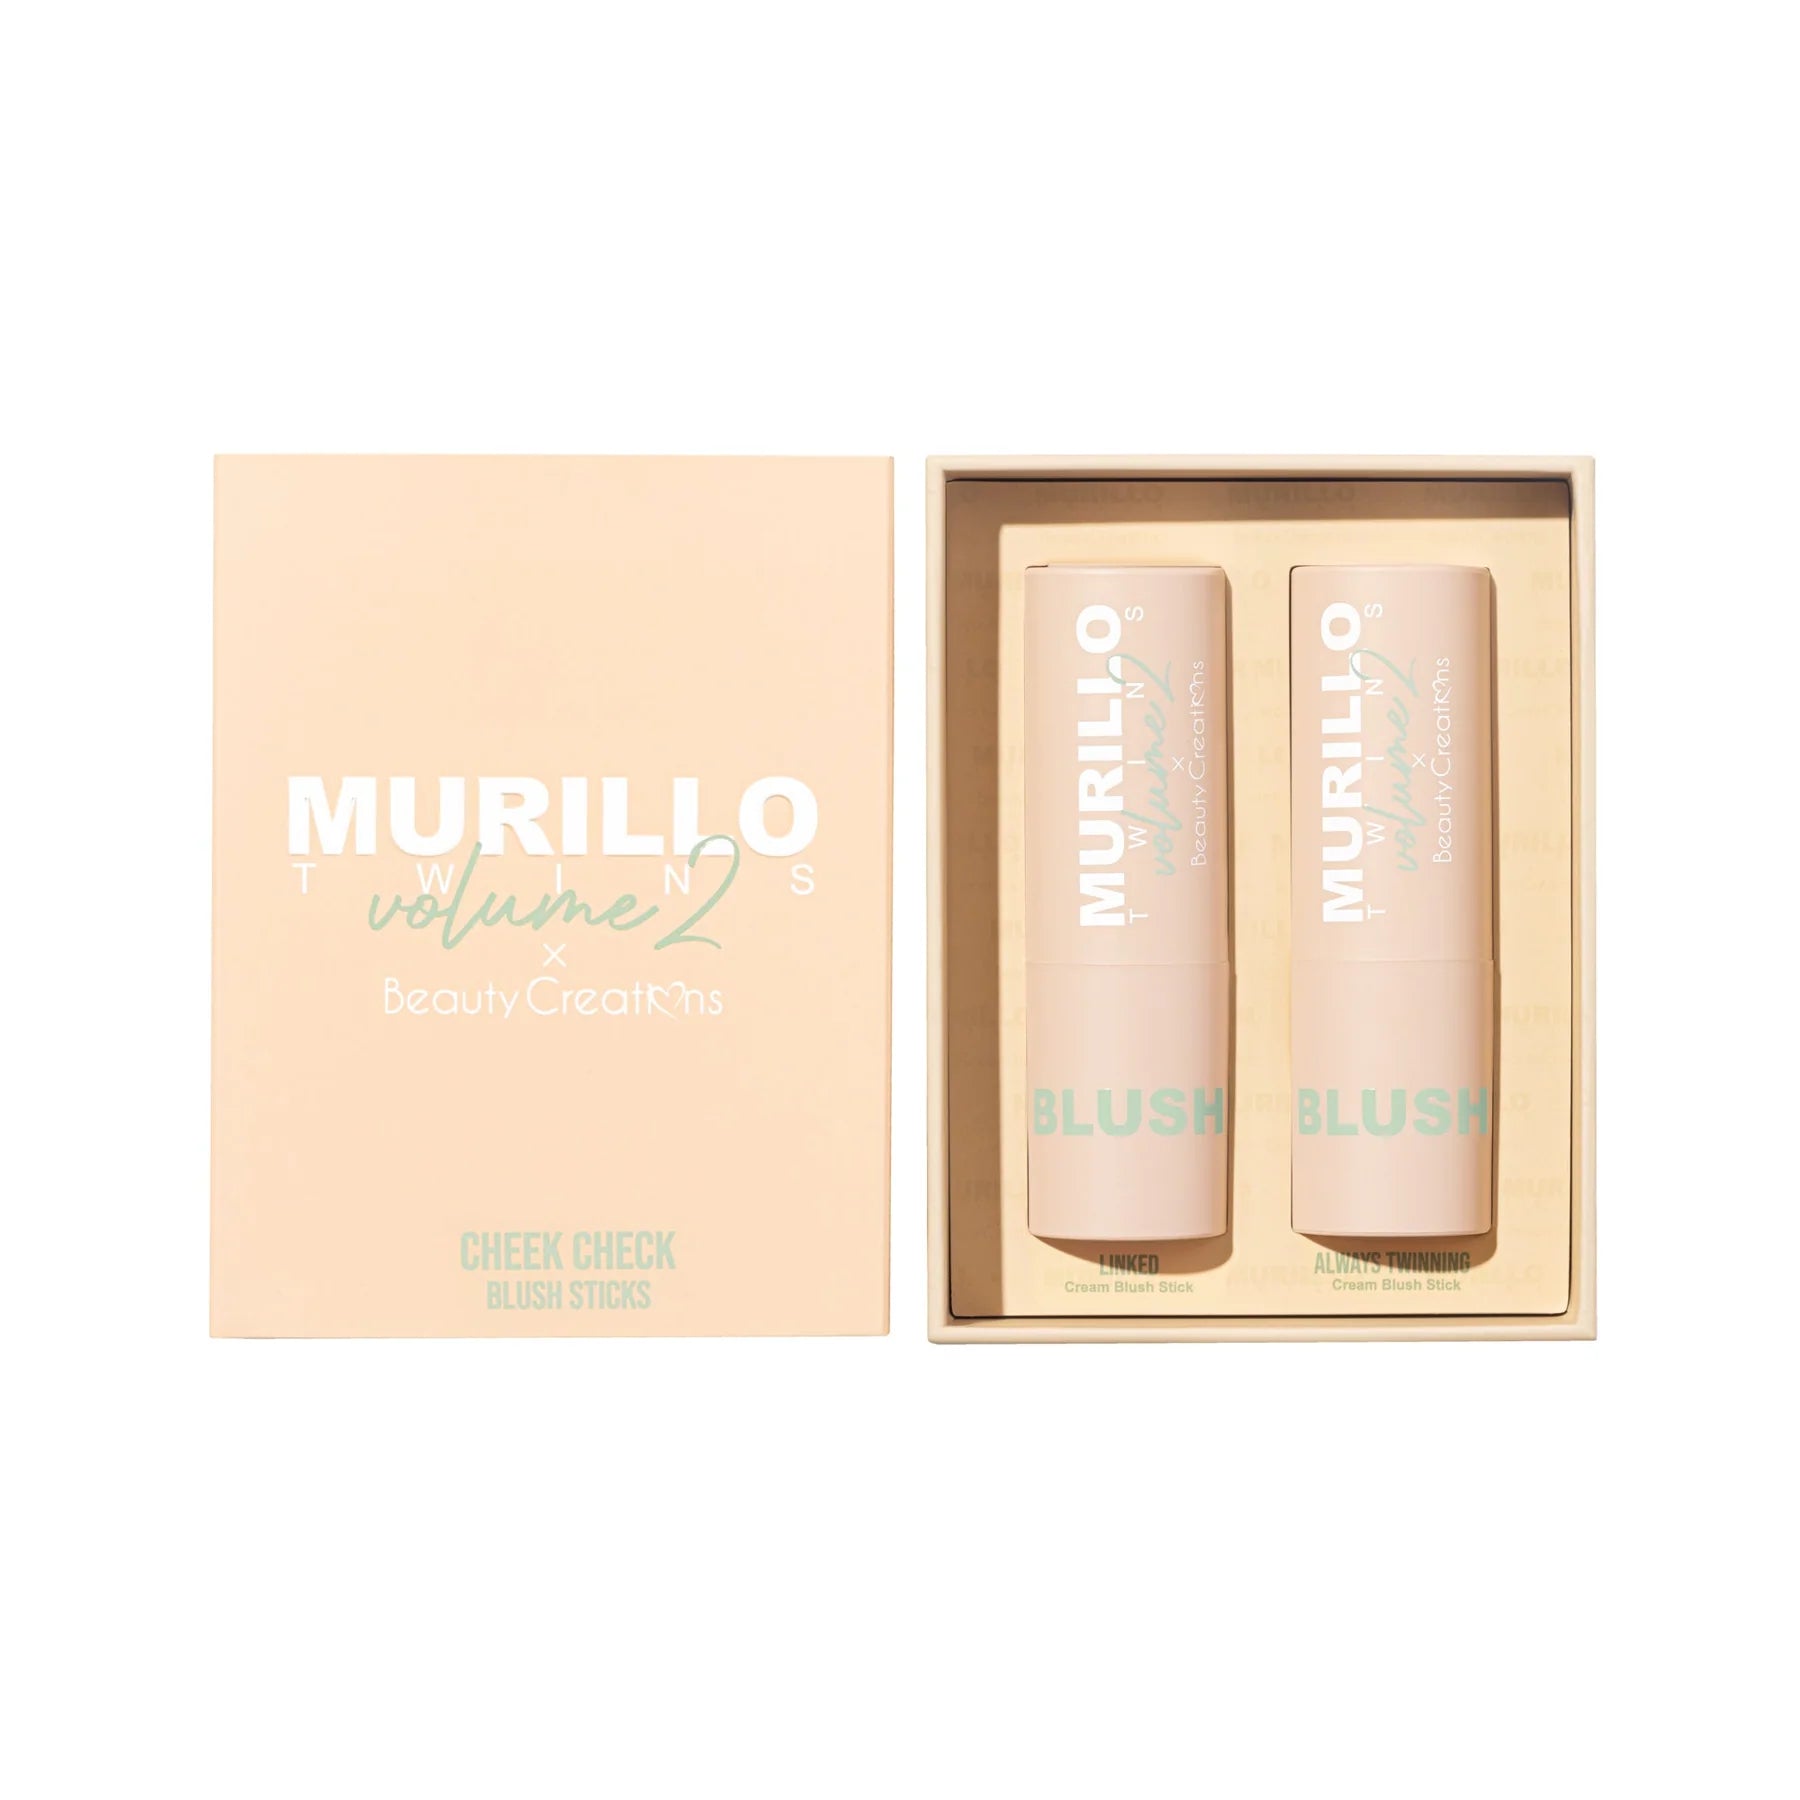 Beauty Creations - Murillo Twins Vol. 2 Cheek Check Blush Sticks